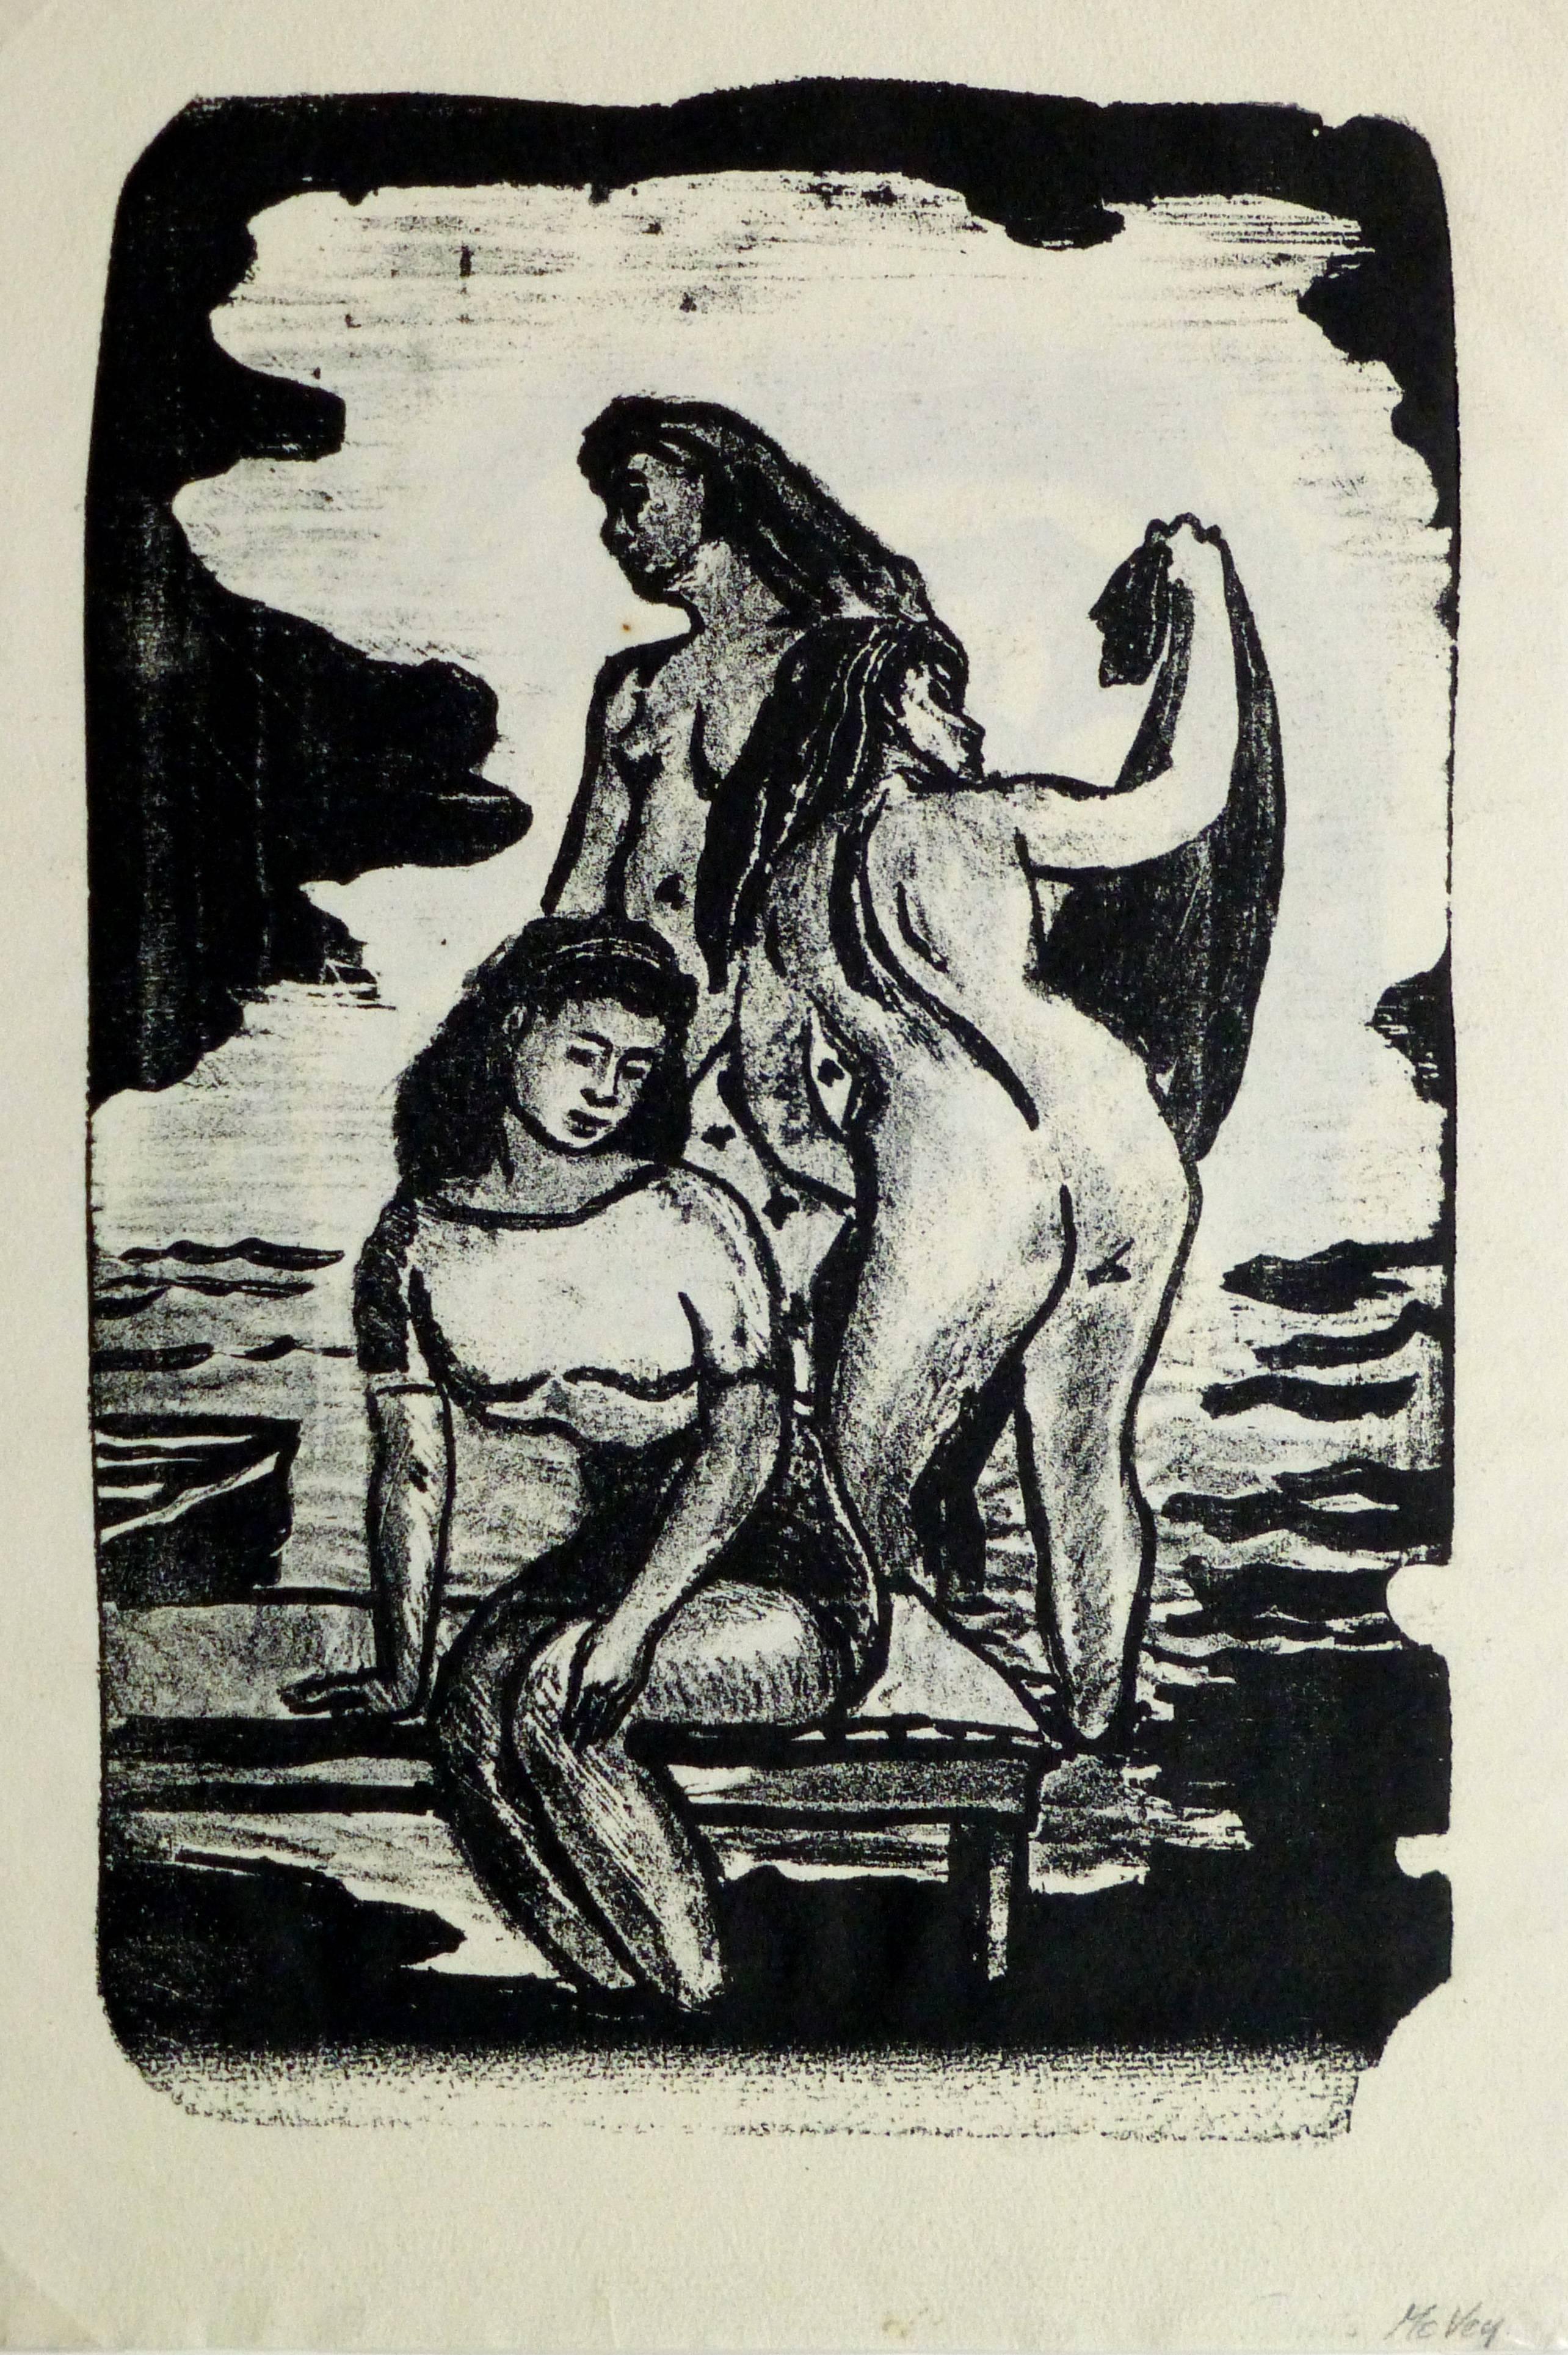 McVey Figurative Print - Three Nudes Bathing